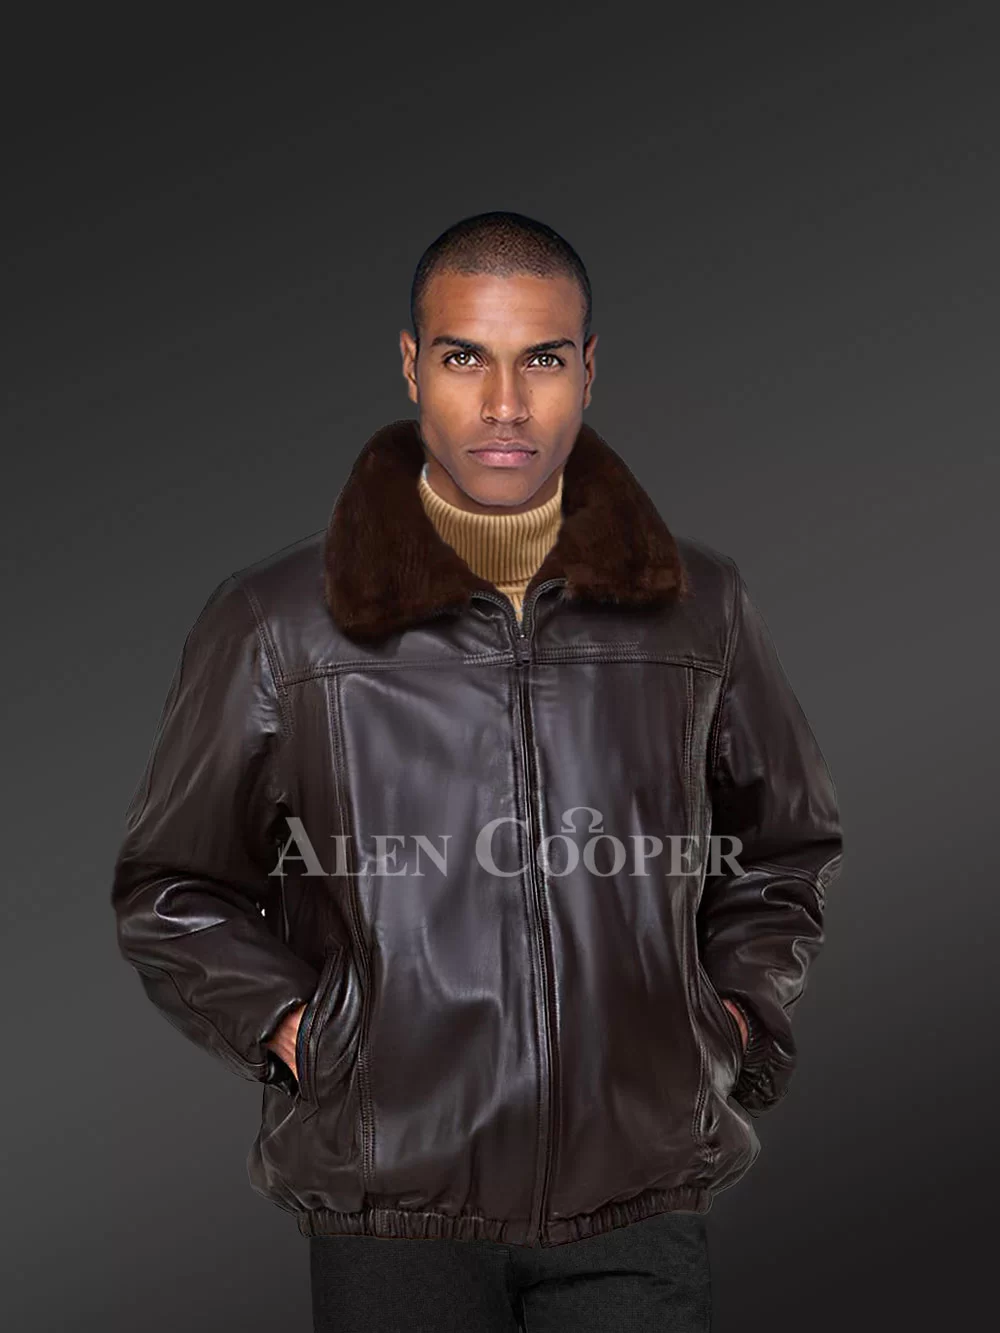 Reversible Hooded Chinchilla Leather Bomber Jacket